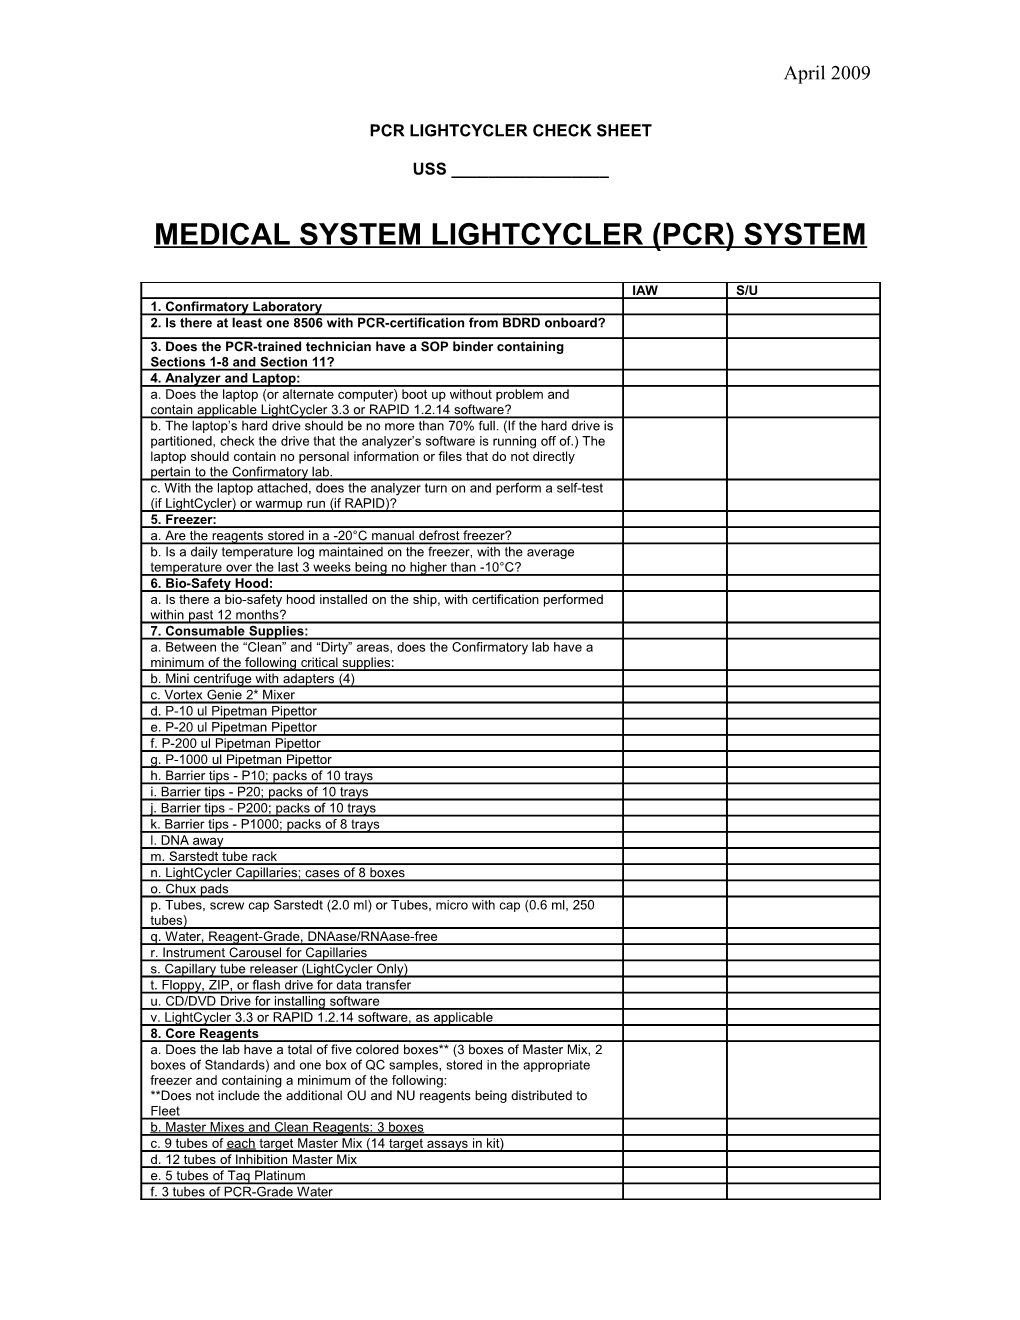 Pcr Lightcycler Check Sheet